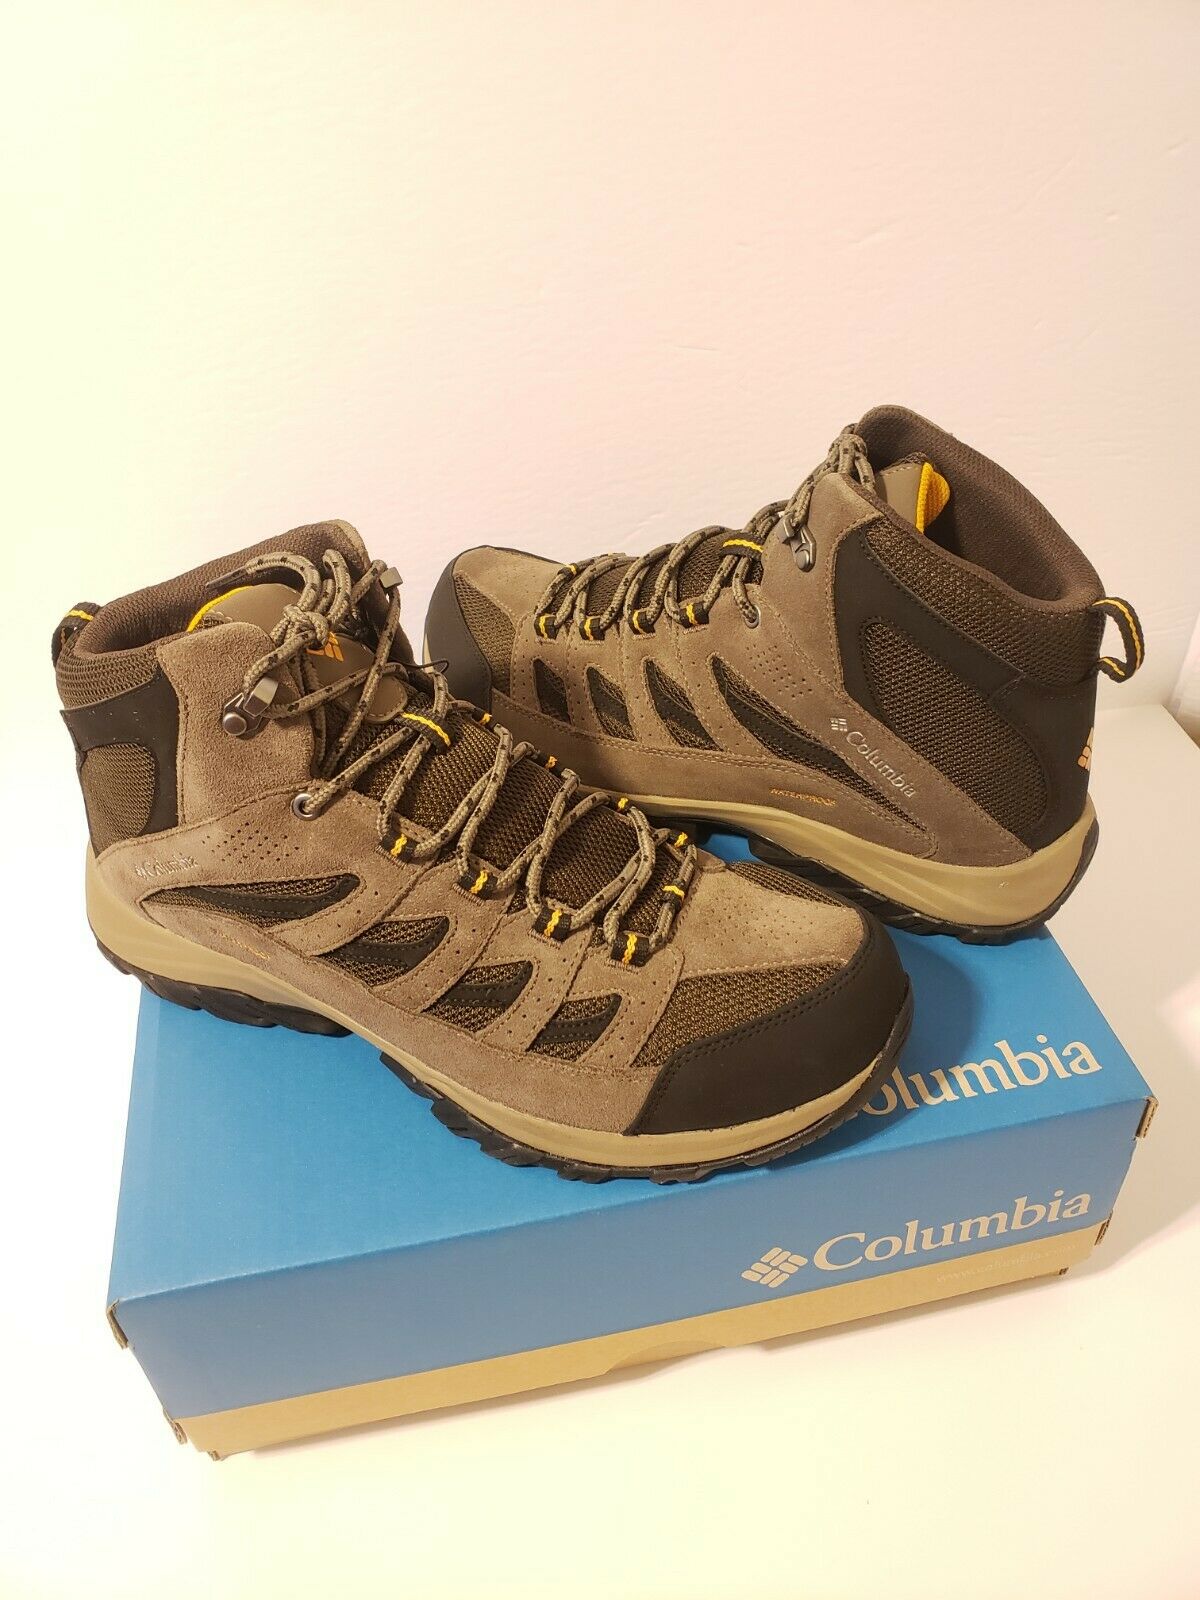 Columbia Crestwood Mid Waterproof Hiking Boot Mens US 8 Wide Shoes Sneakers